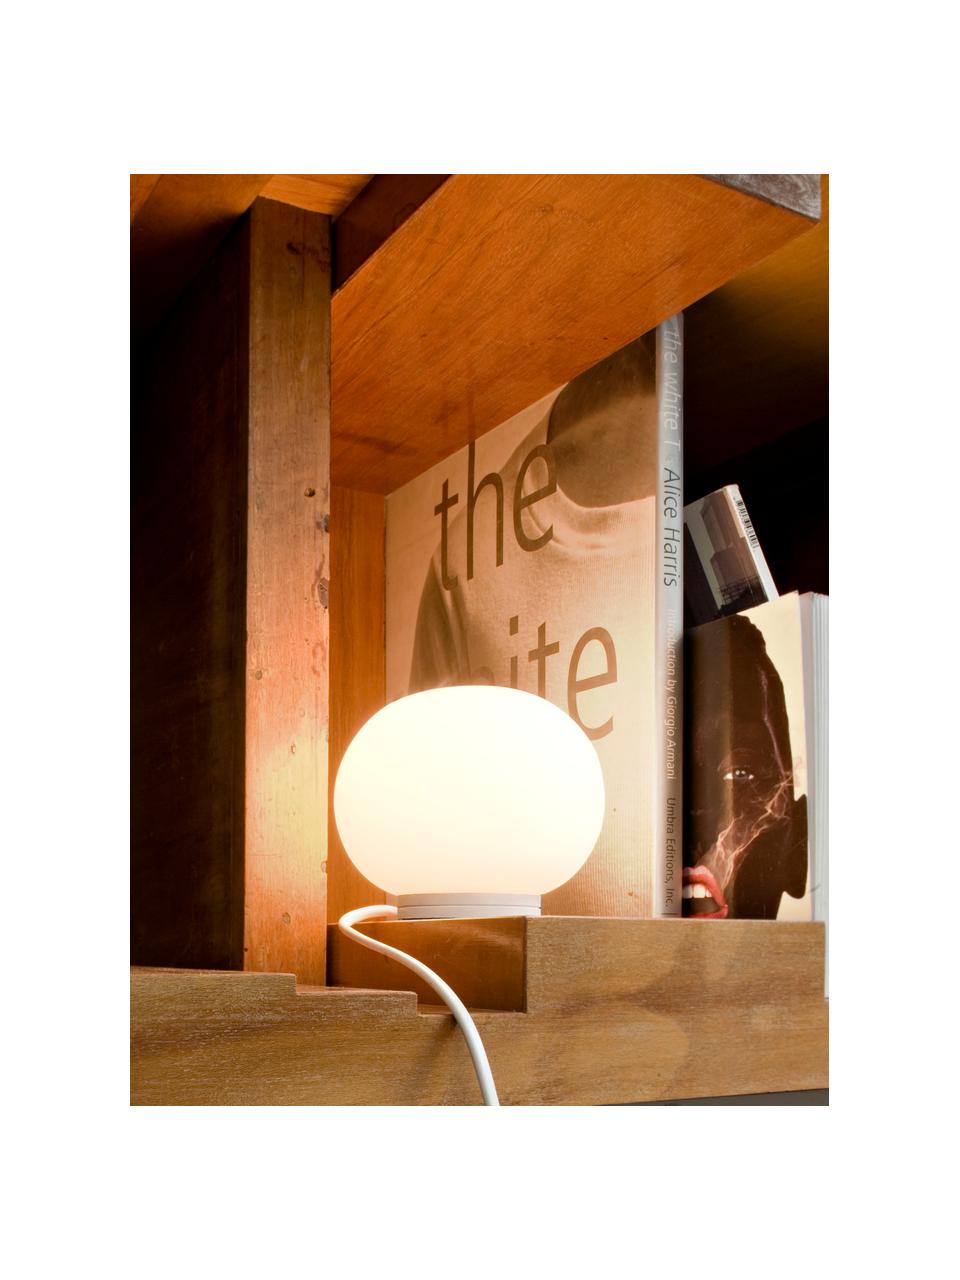 Petite lampe à poser Glo-Ball, intensité lumineuse variable, Blanc, Ø 12 x haut. 9 cm